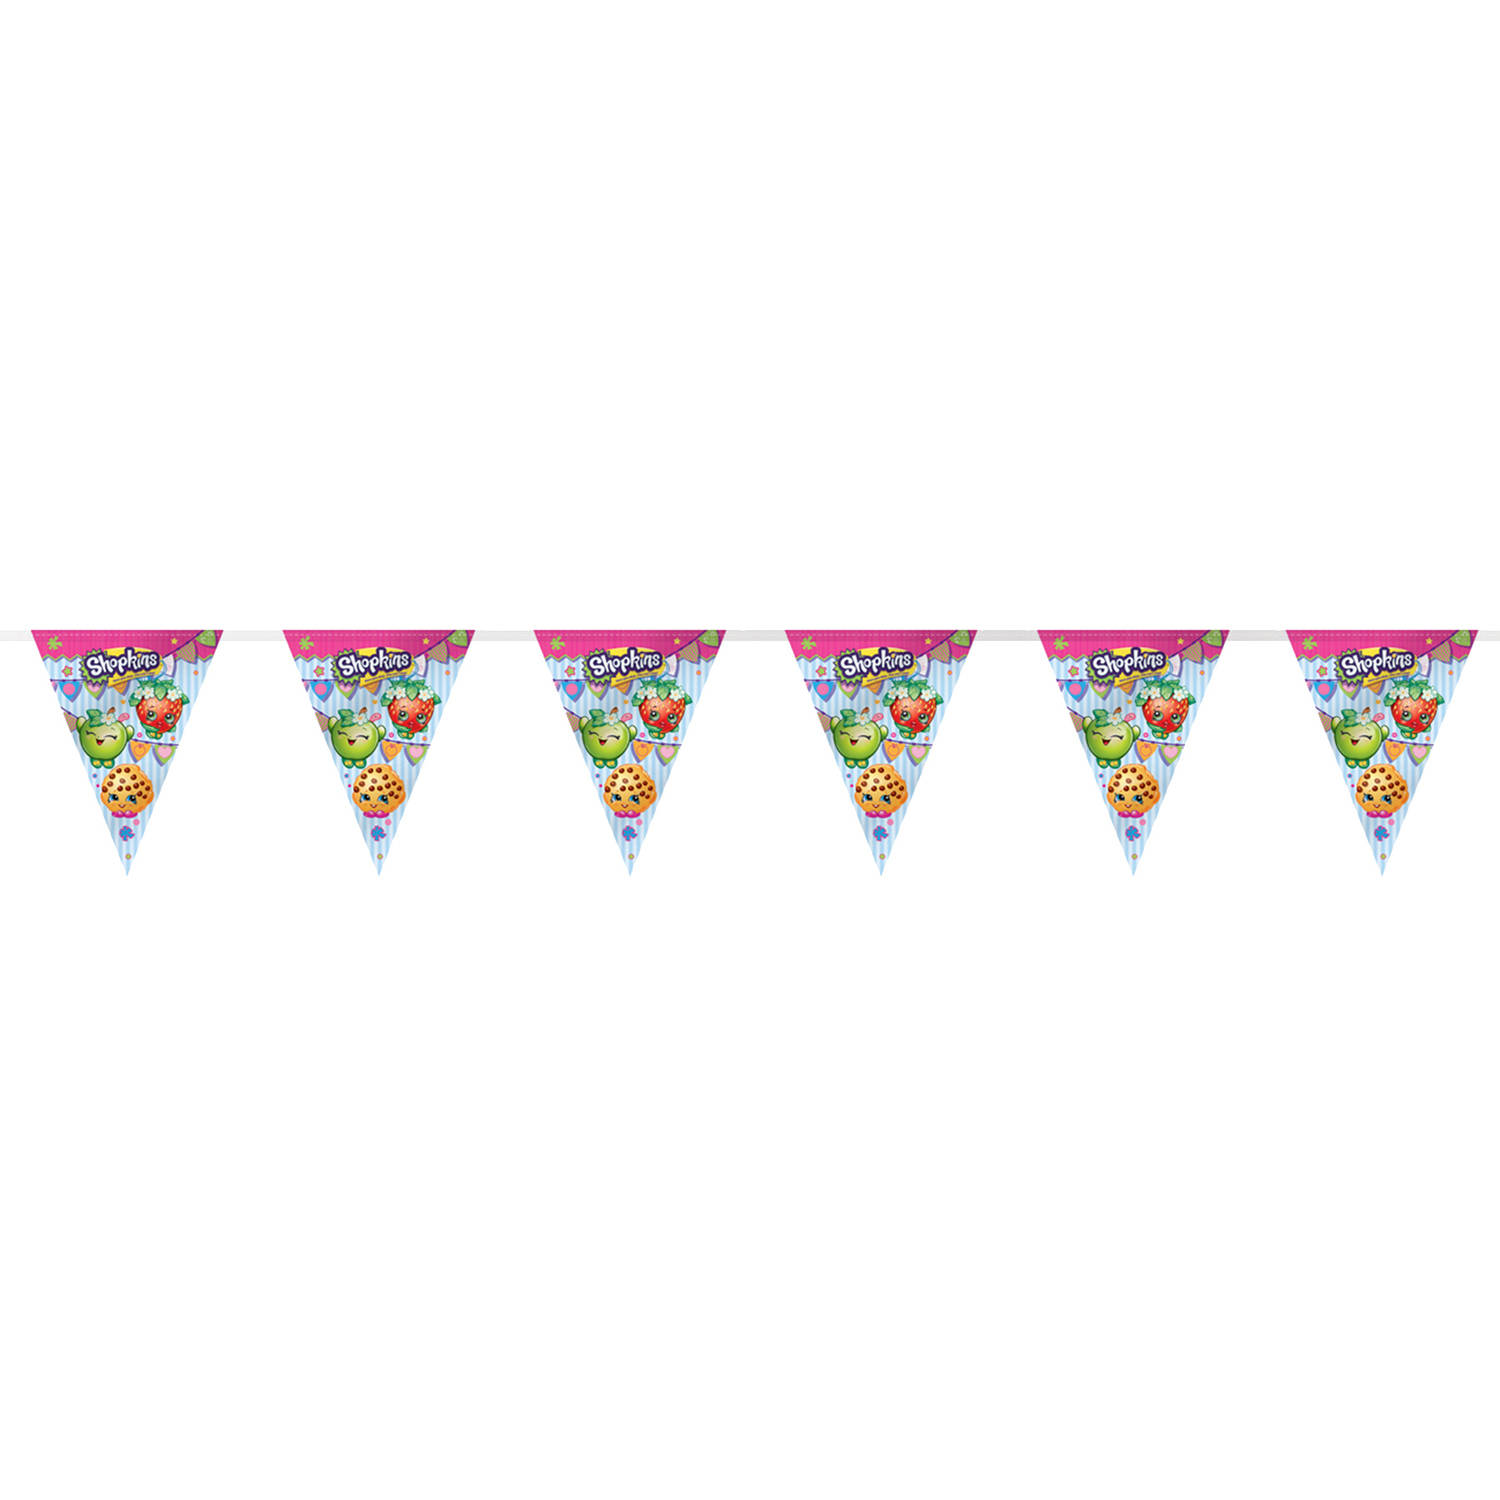 Shopkins Birthday Party Decorating Kit, 7pcs - image 3 of 5